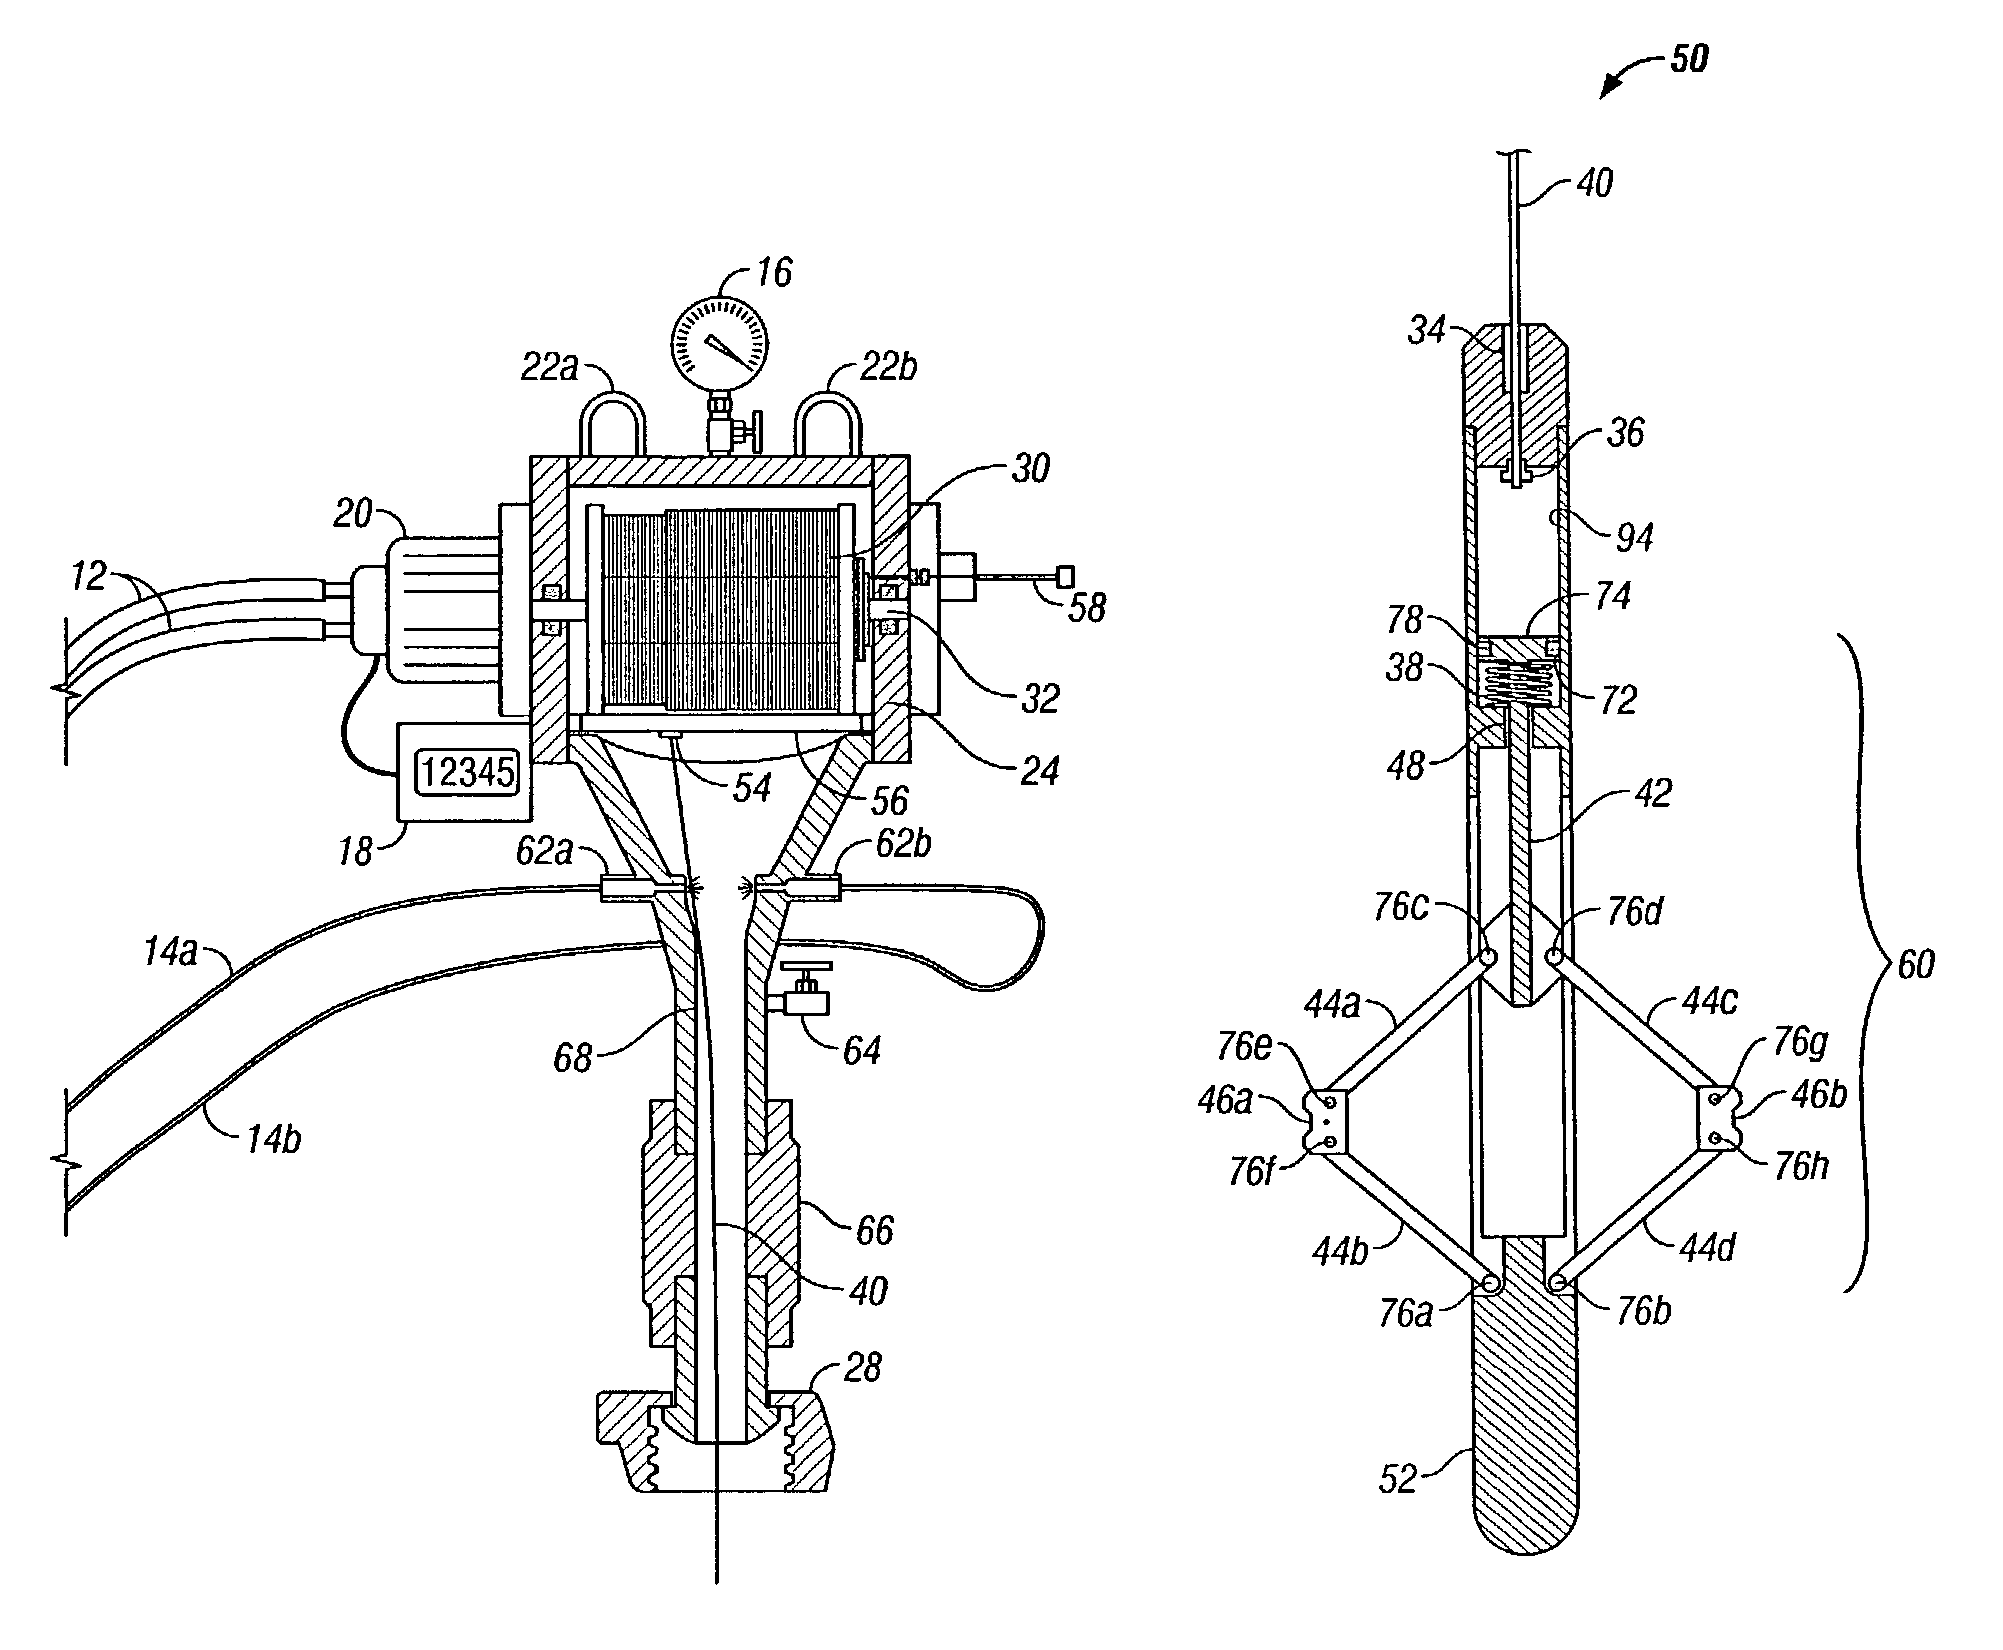 Method and apparatus for determining the temperature of subterranean wells using fiber optic cable